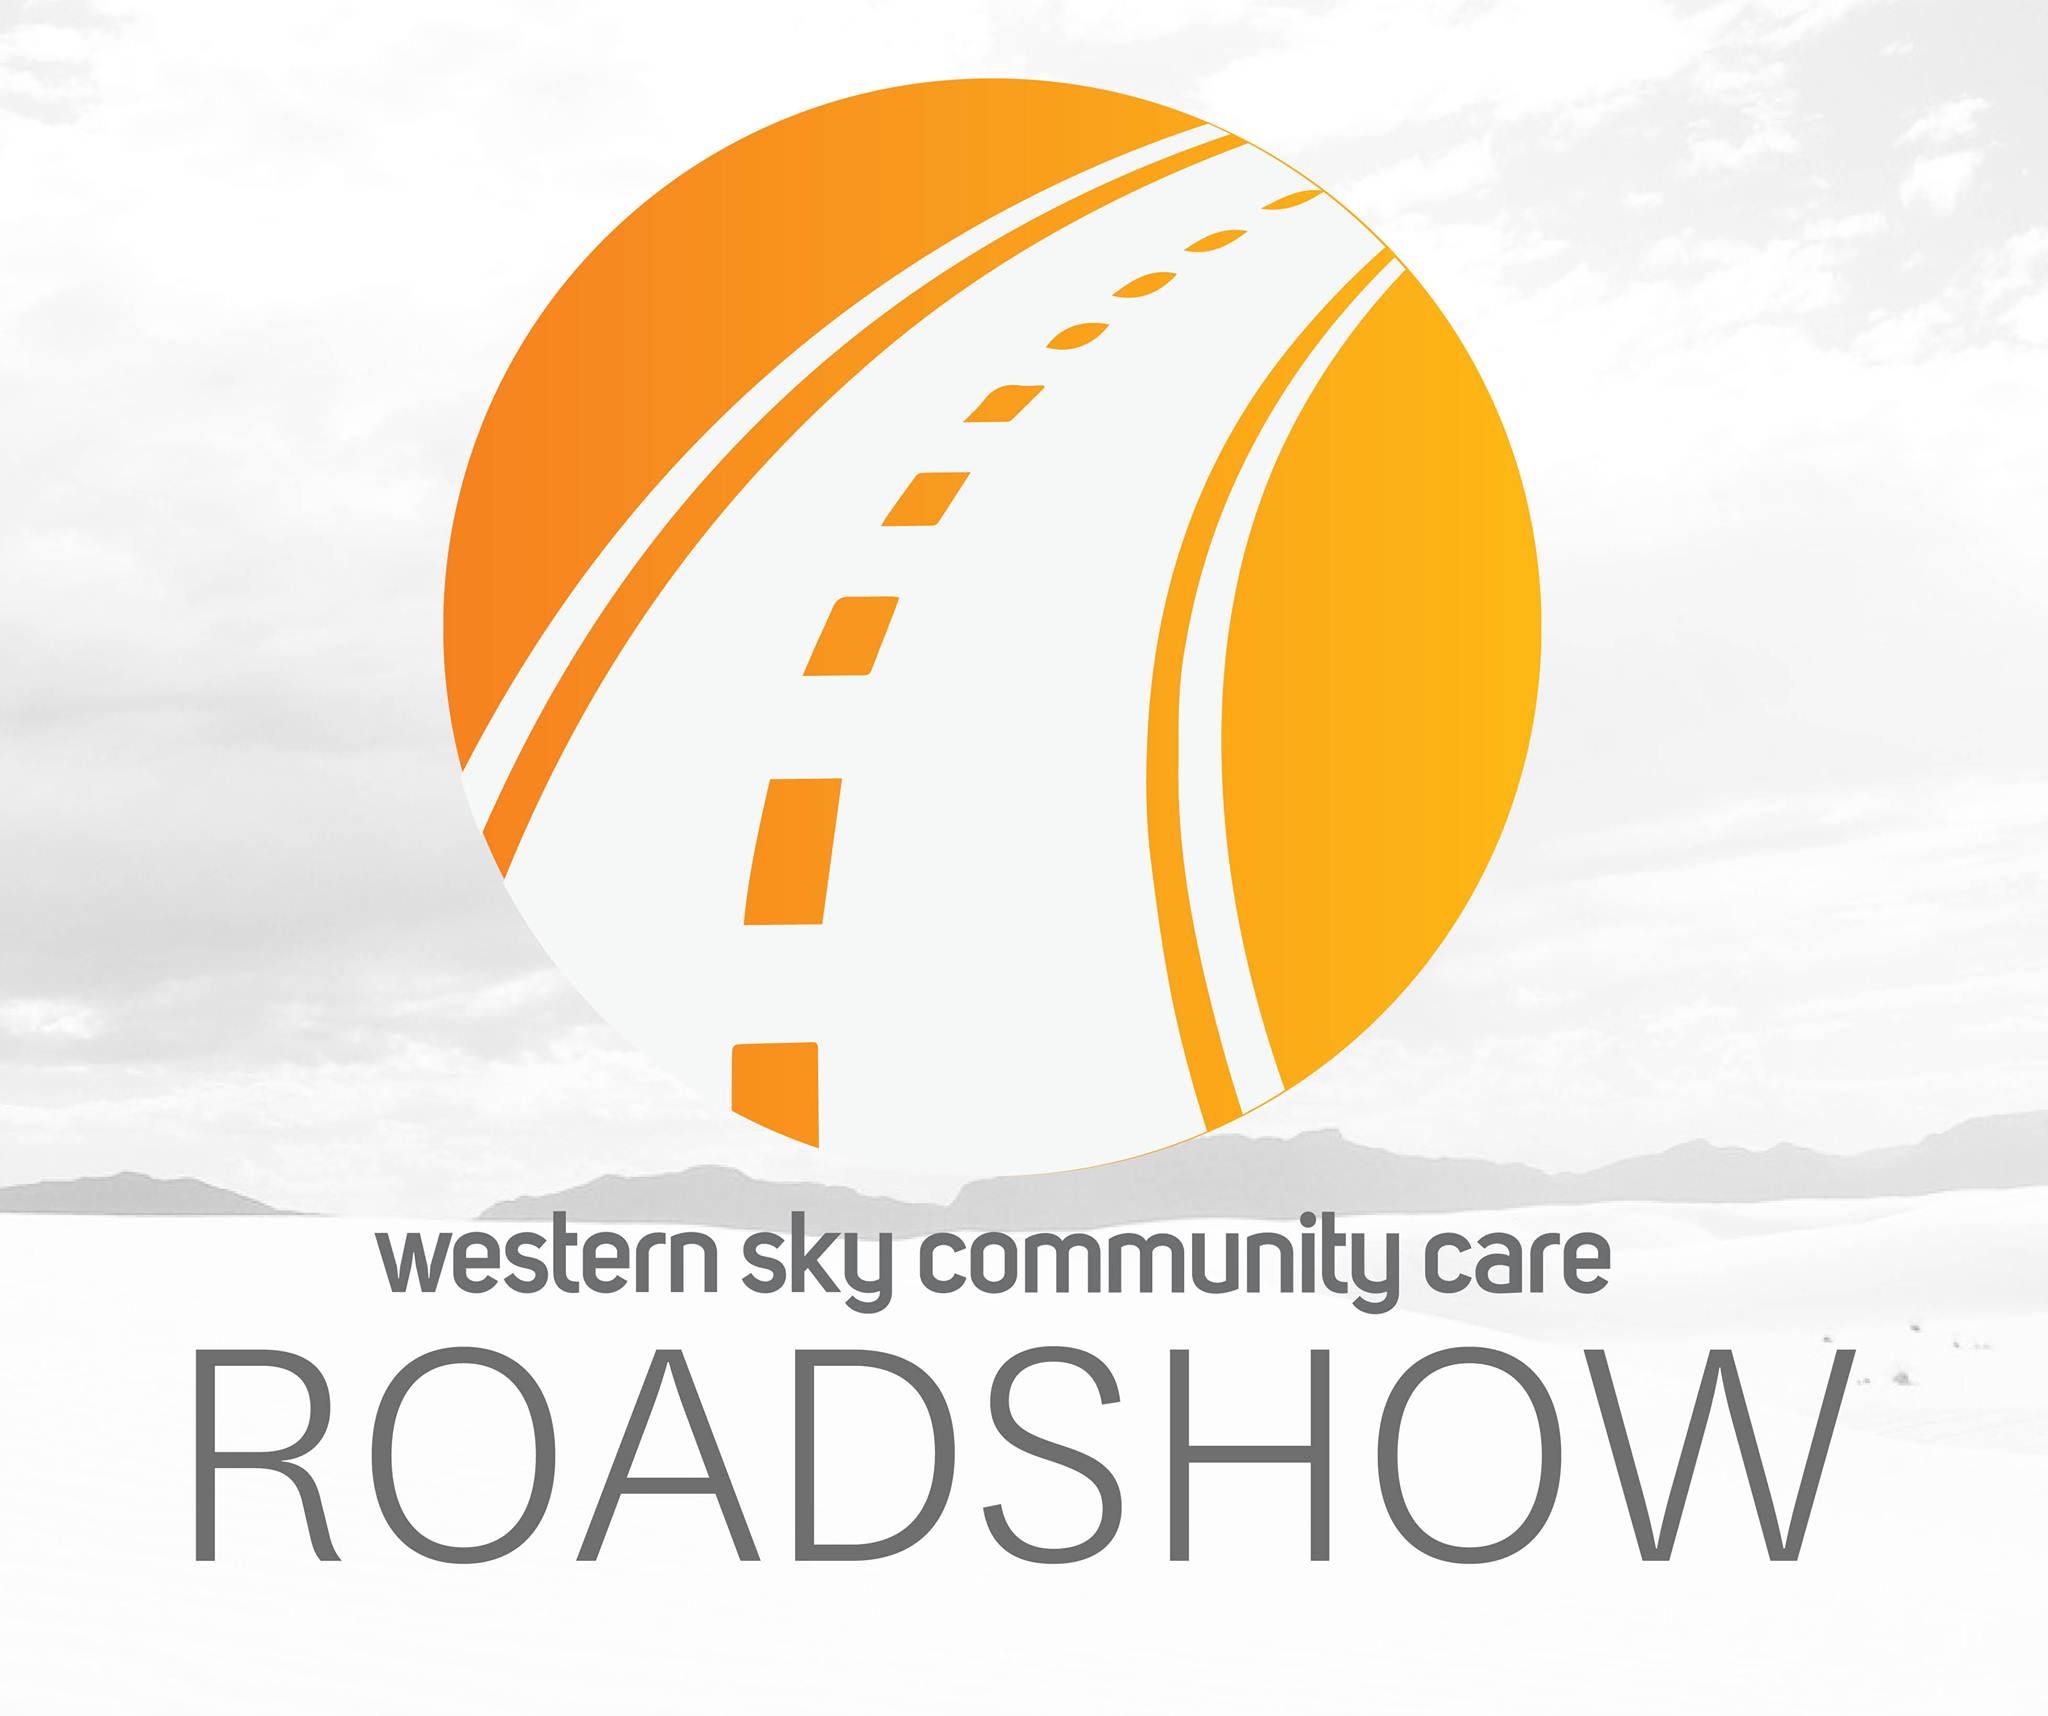 Western Sky Roadshow & Flu Shot Clinic